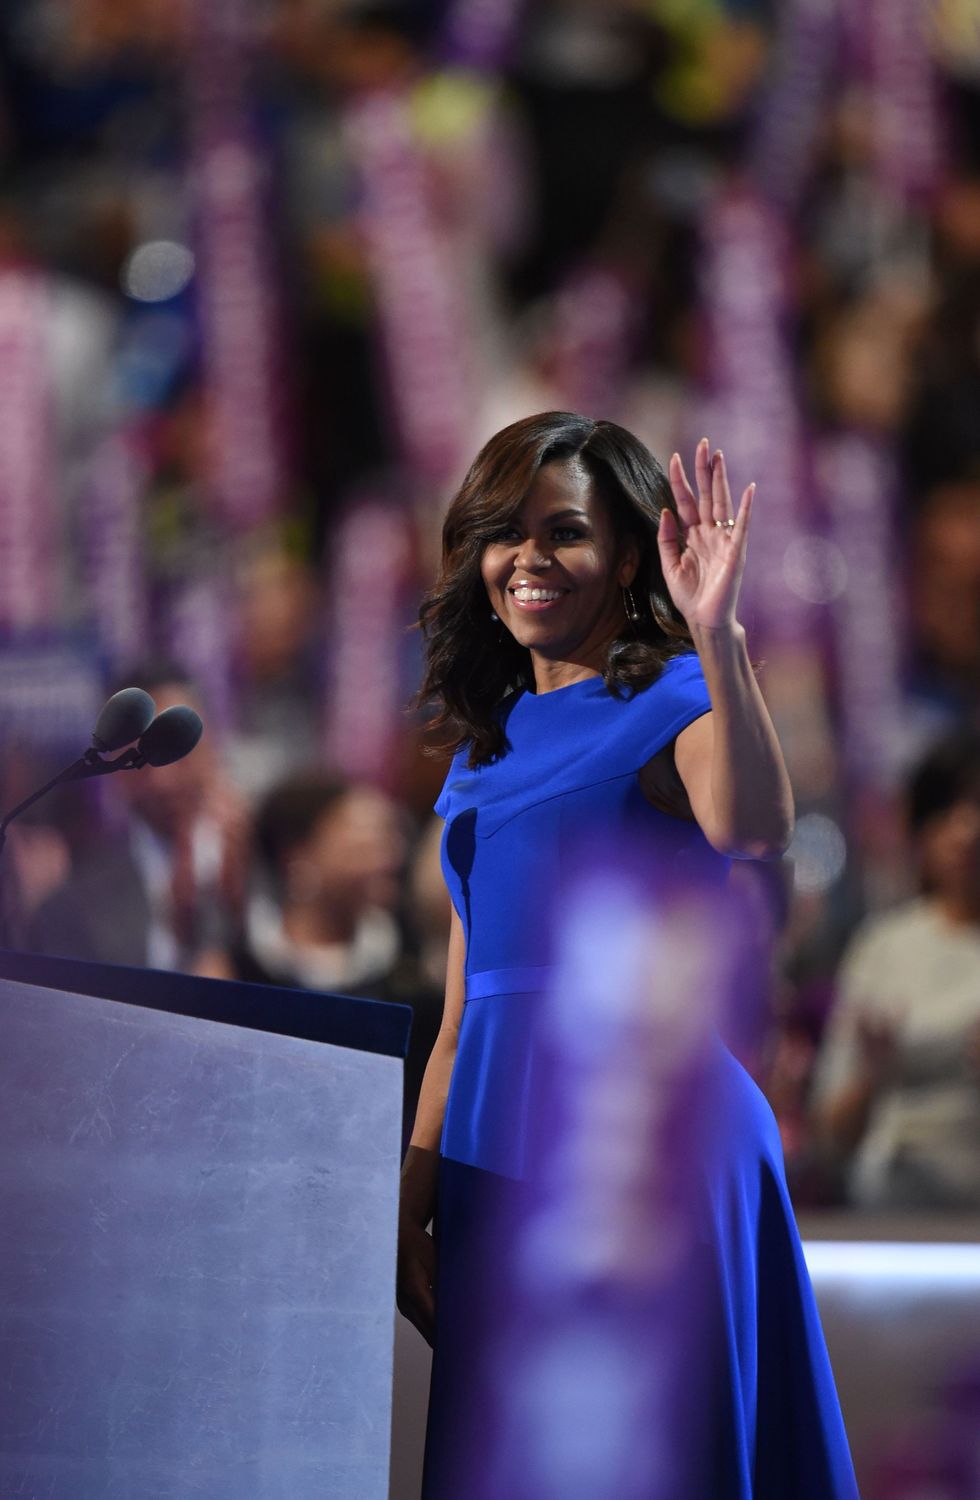 <p><span class="redactor-invisible-space"></span><span>除了顧及視覺上的美觀，Michelle Obama透過服裝支持美國設計師的成果有目共睹，還會悉心根據不同場合的歷史意義或民族元素選擇作品，也就是這樣細膩的穿衣哲學，才讓這位第一夫人顯得如此特出。</span></p>    <p>Michelle Obama穿上美國年輕設計師Christian Siriano的洋裝，出席民主黨全國代表大會，亮眼的寶藍色同時還是民主黨的代表色系。</p>